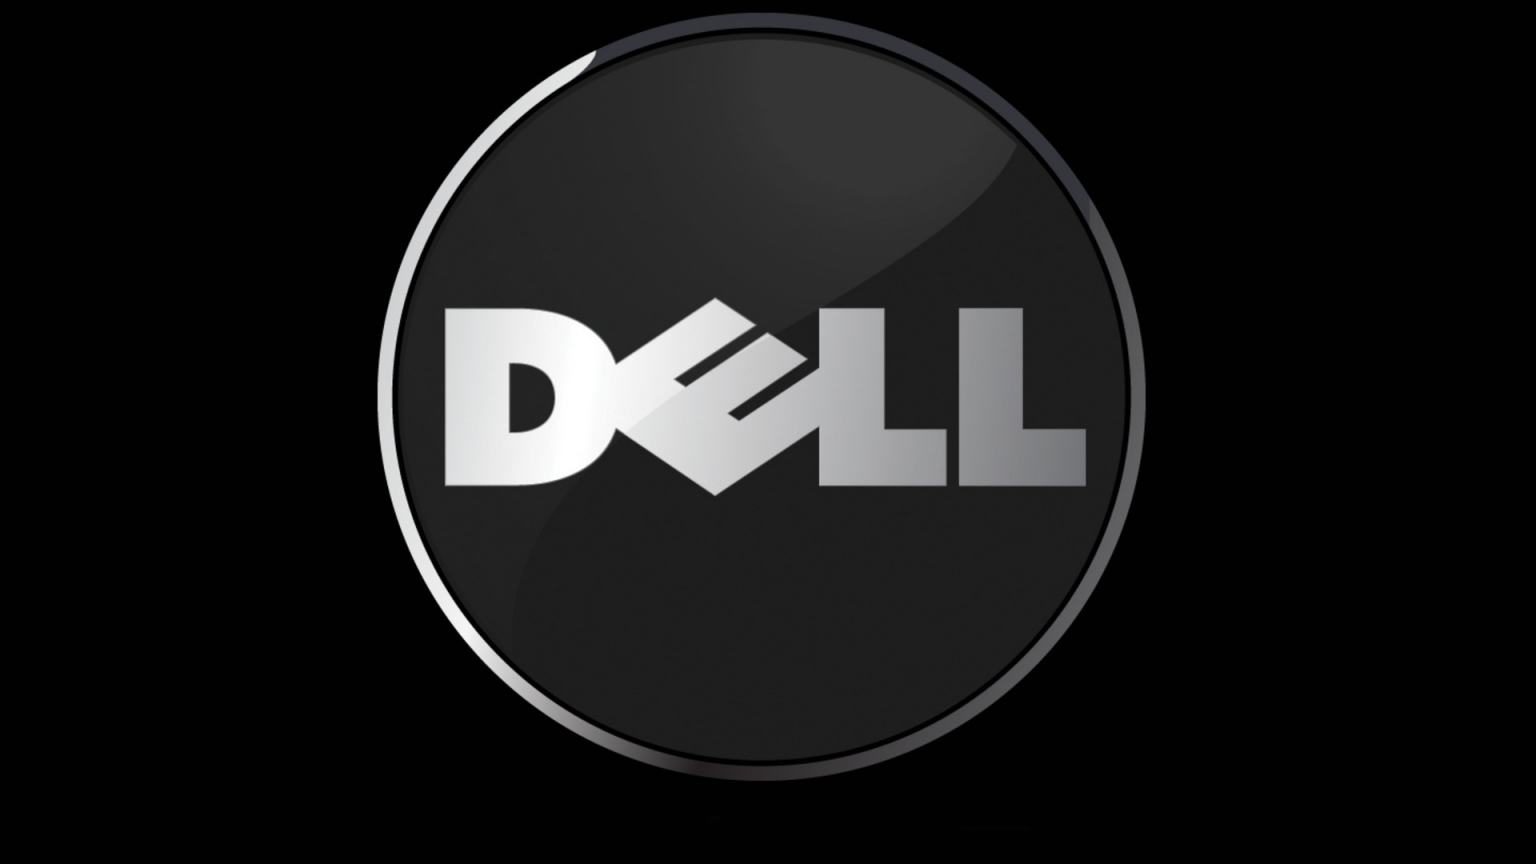 Dell black background for 1536 x 864 HDTV resolution